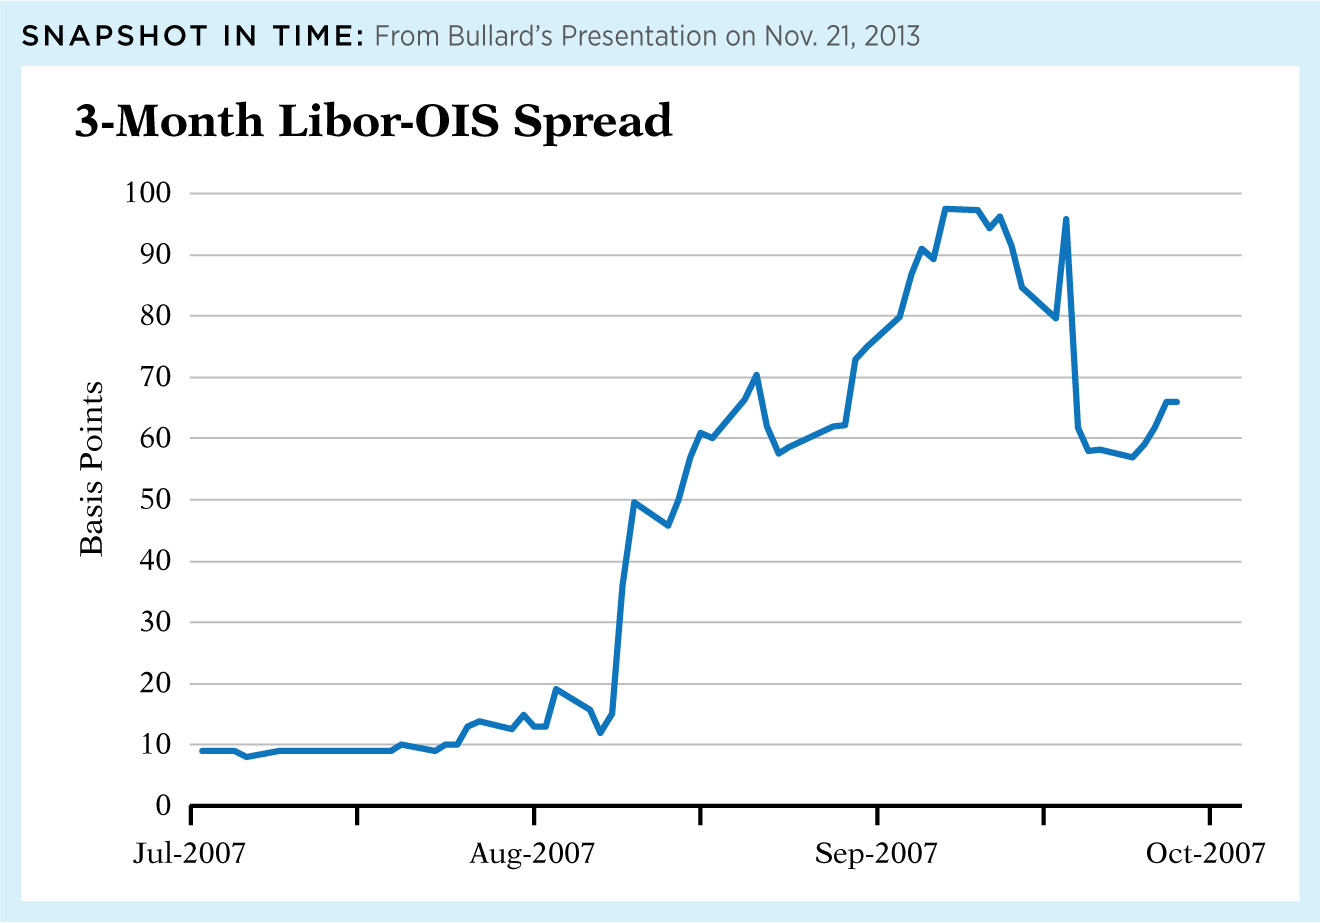 3-Month Libor-OIS spread